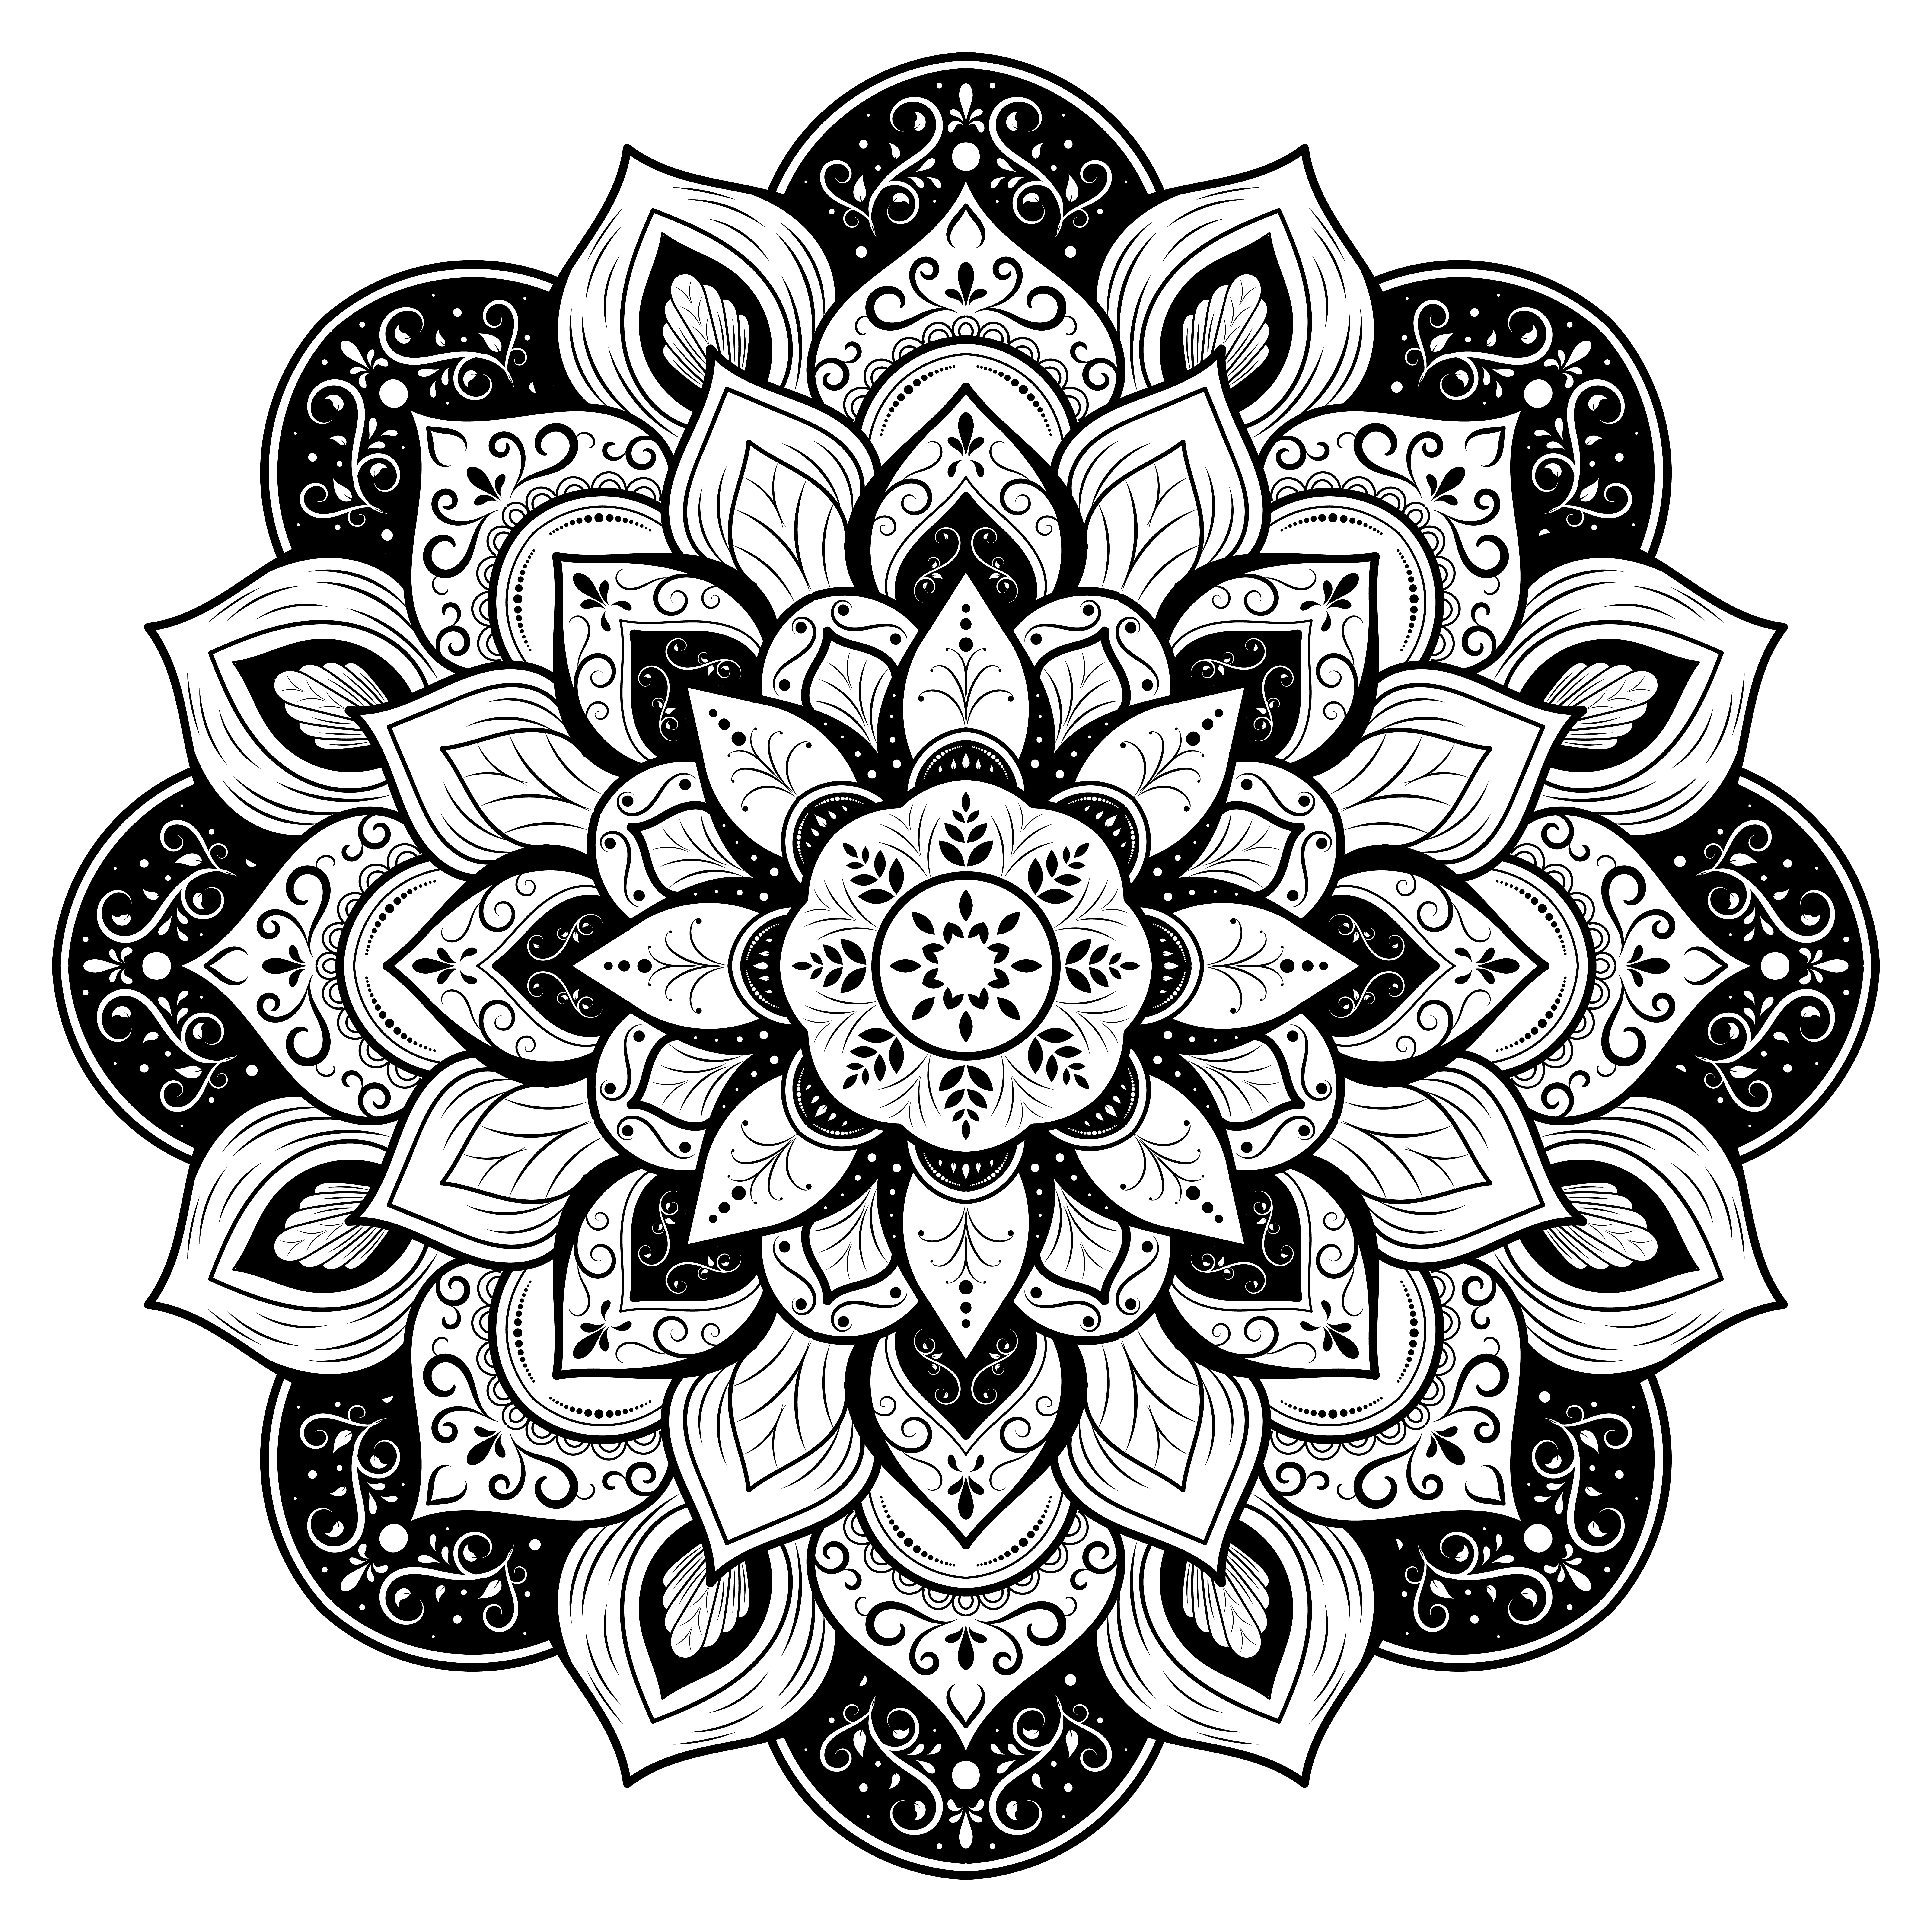 Decorative black and white floral mandala 1228368 Vector Art at Vecteezy